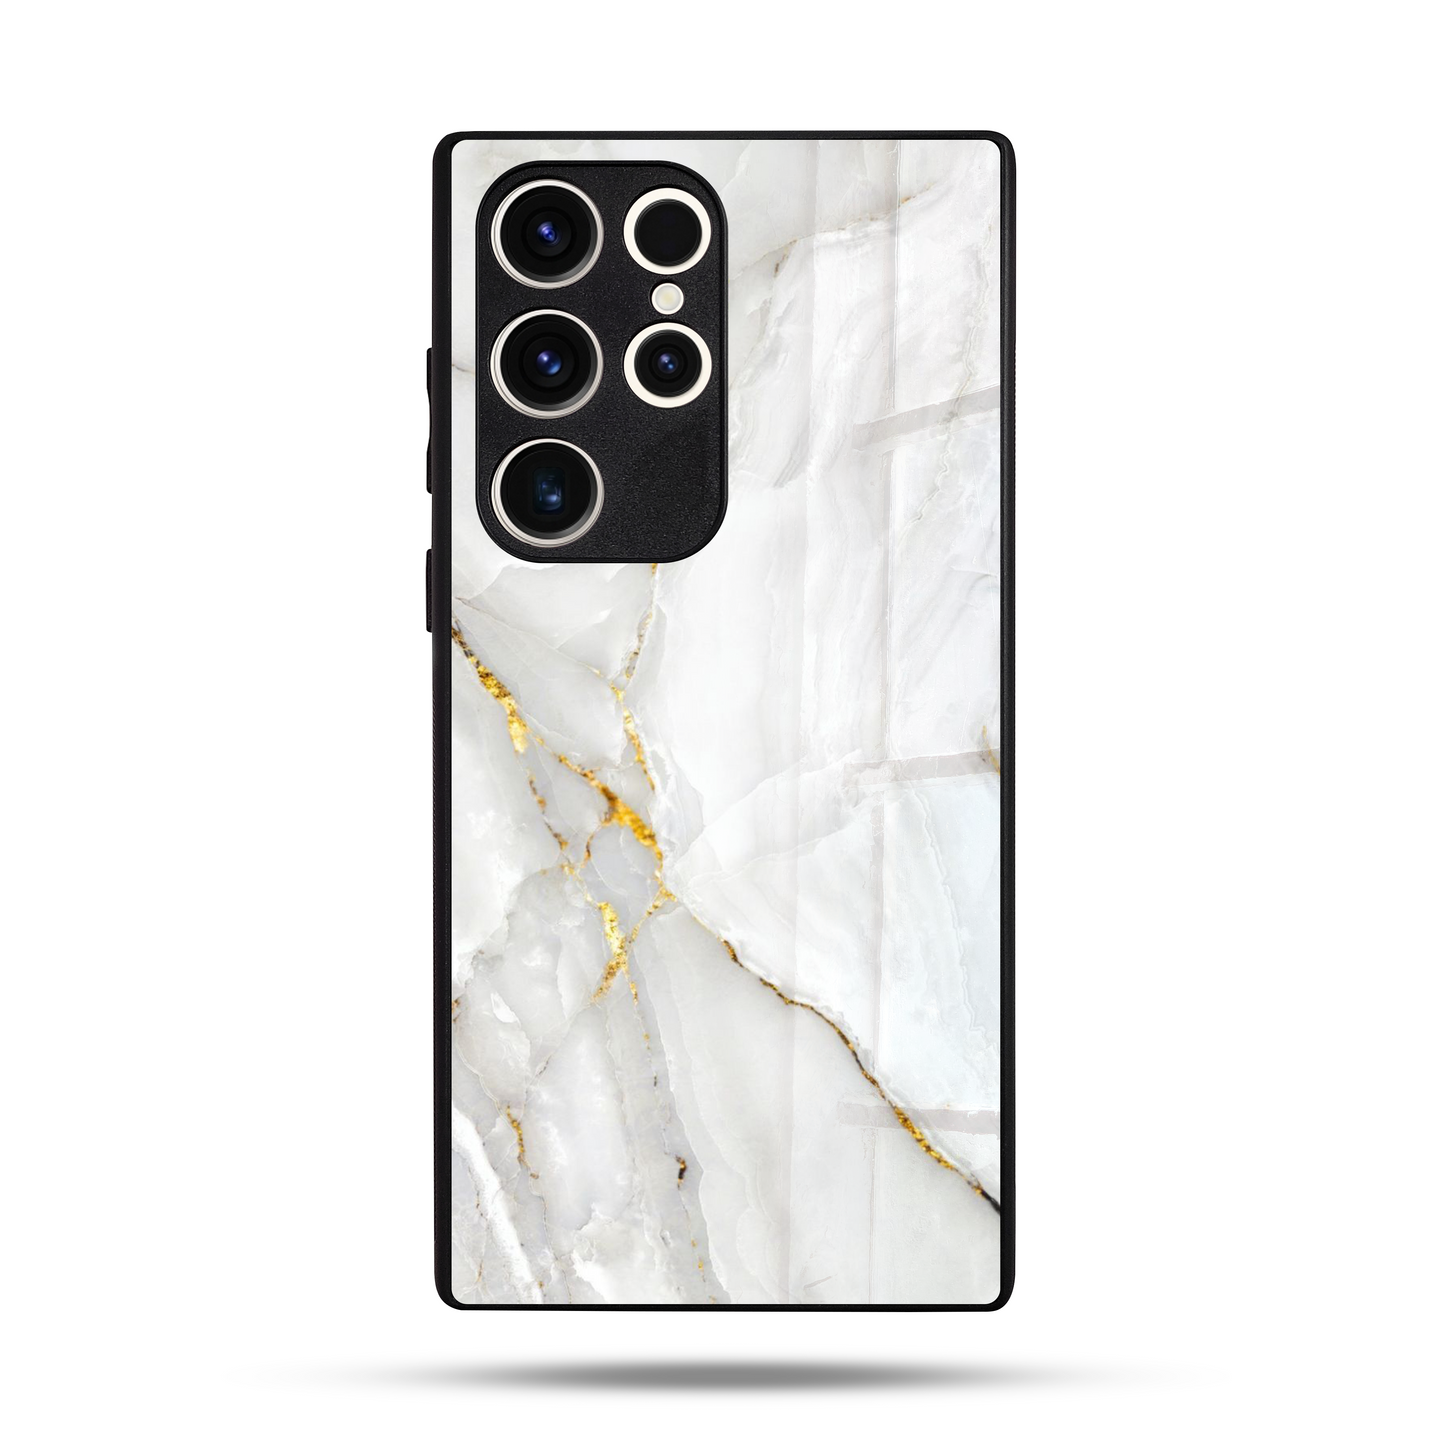 Liquid Marble Royal White SuperGlass Case Cover